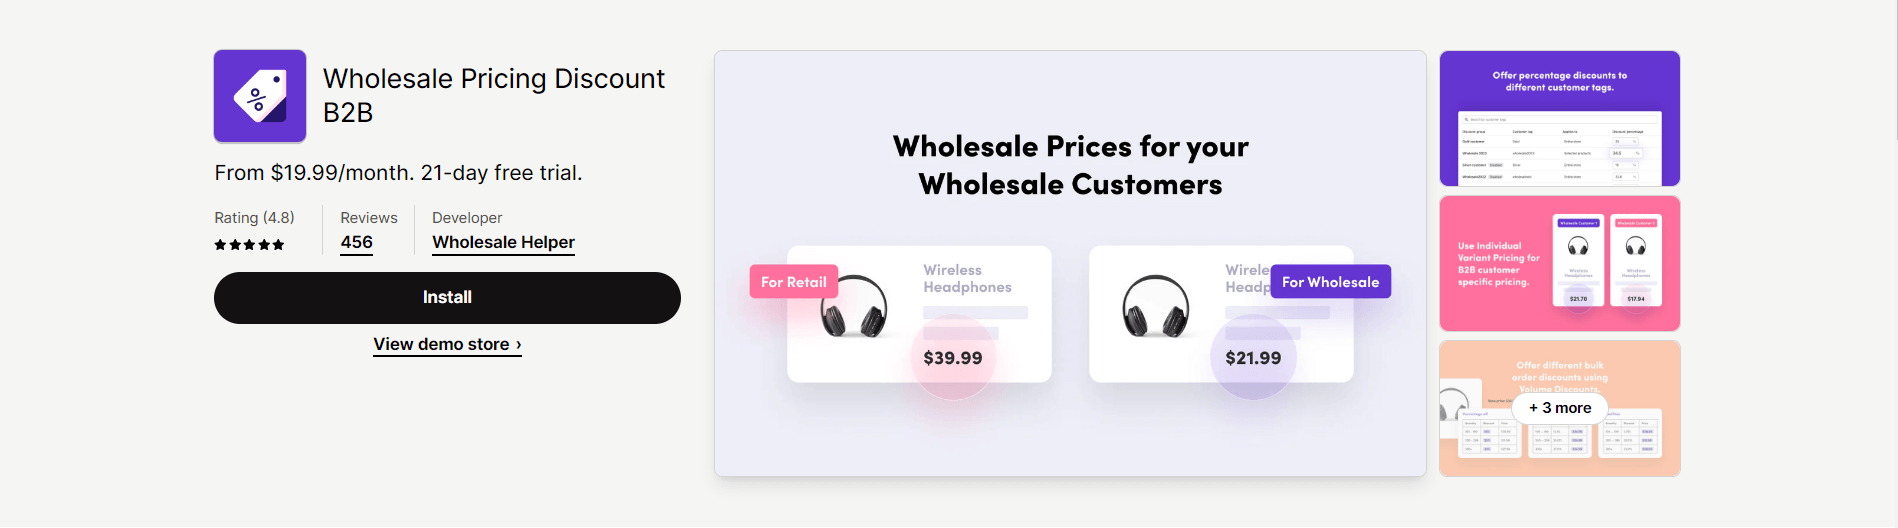 Wholesale Pricing Discount B2B app